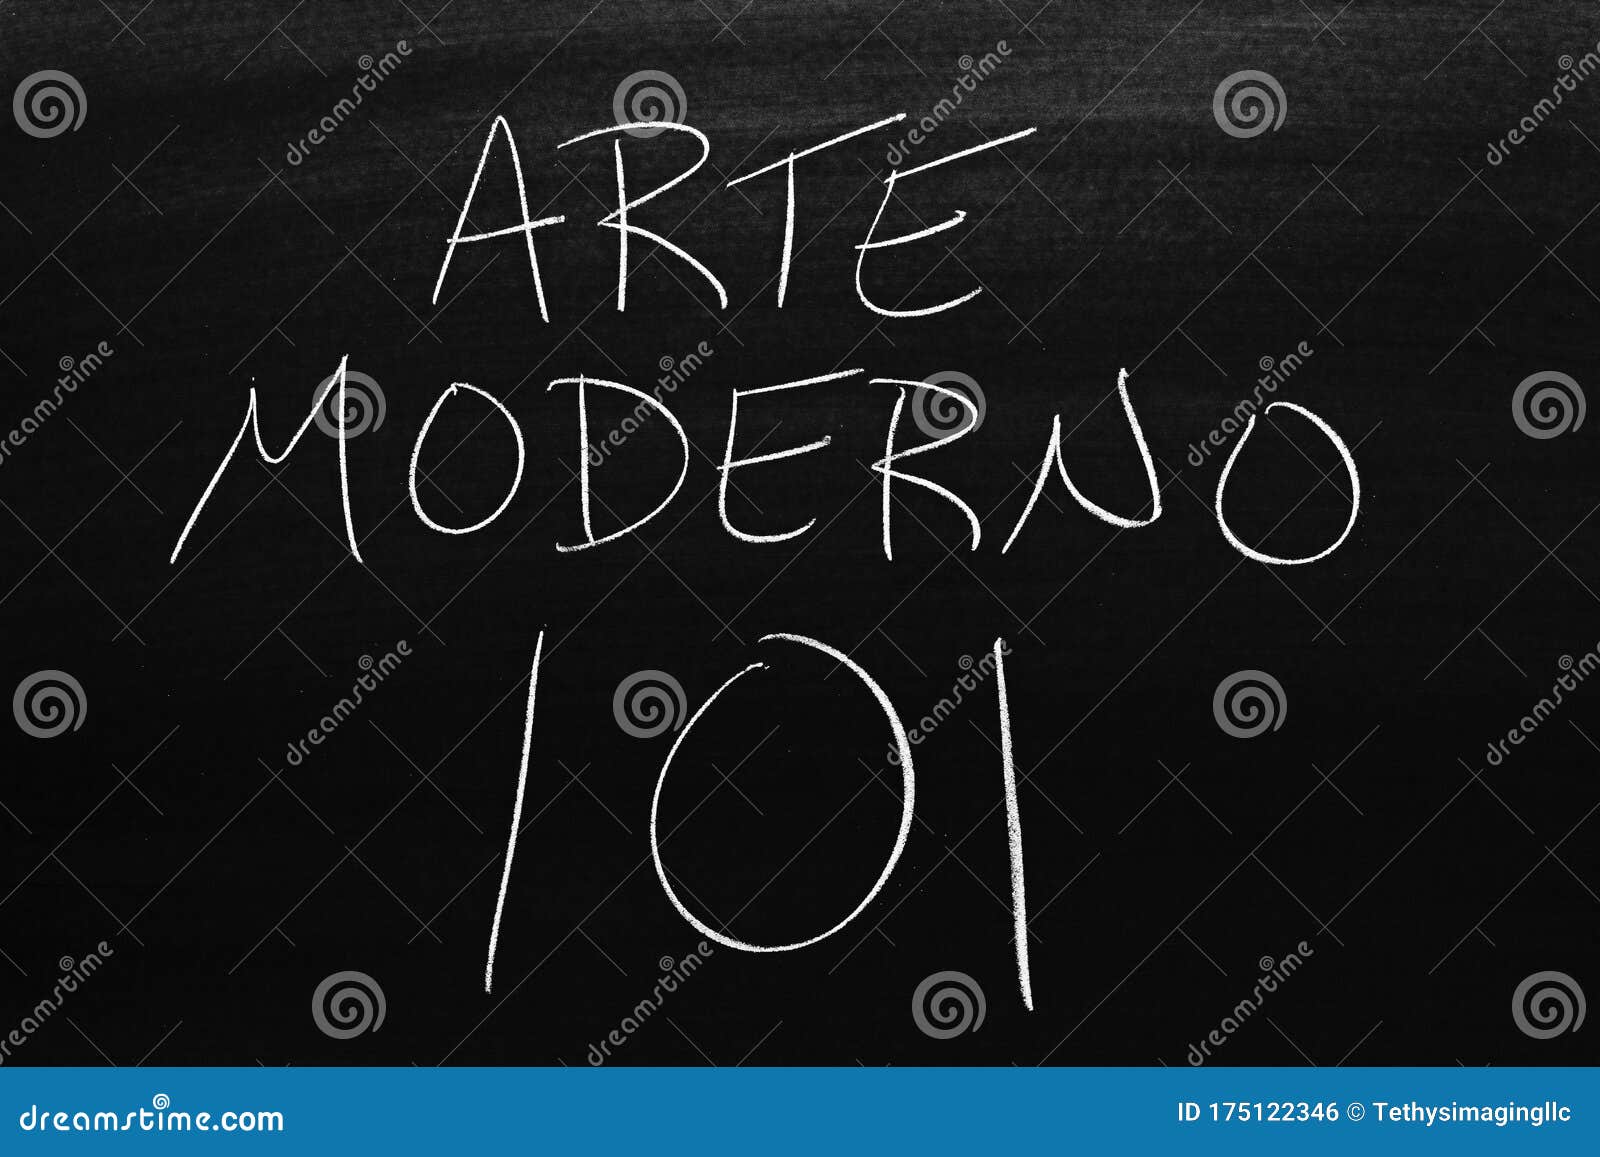 arte moderno 101 on a blackboard.  translation: modern art 101